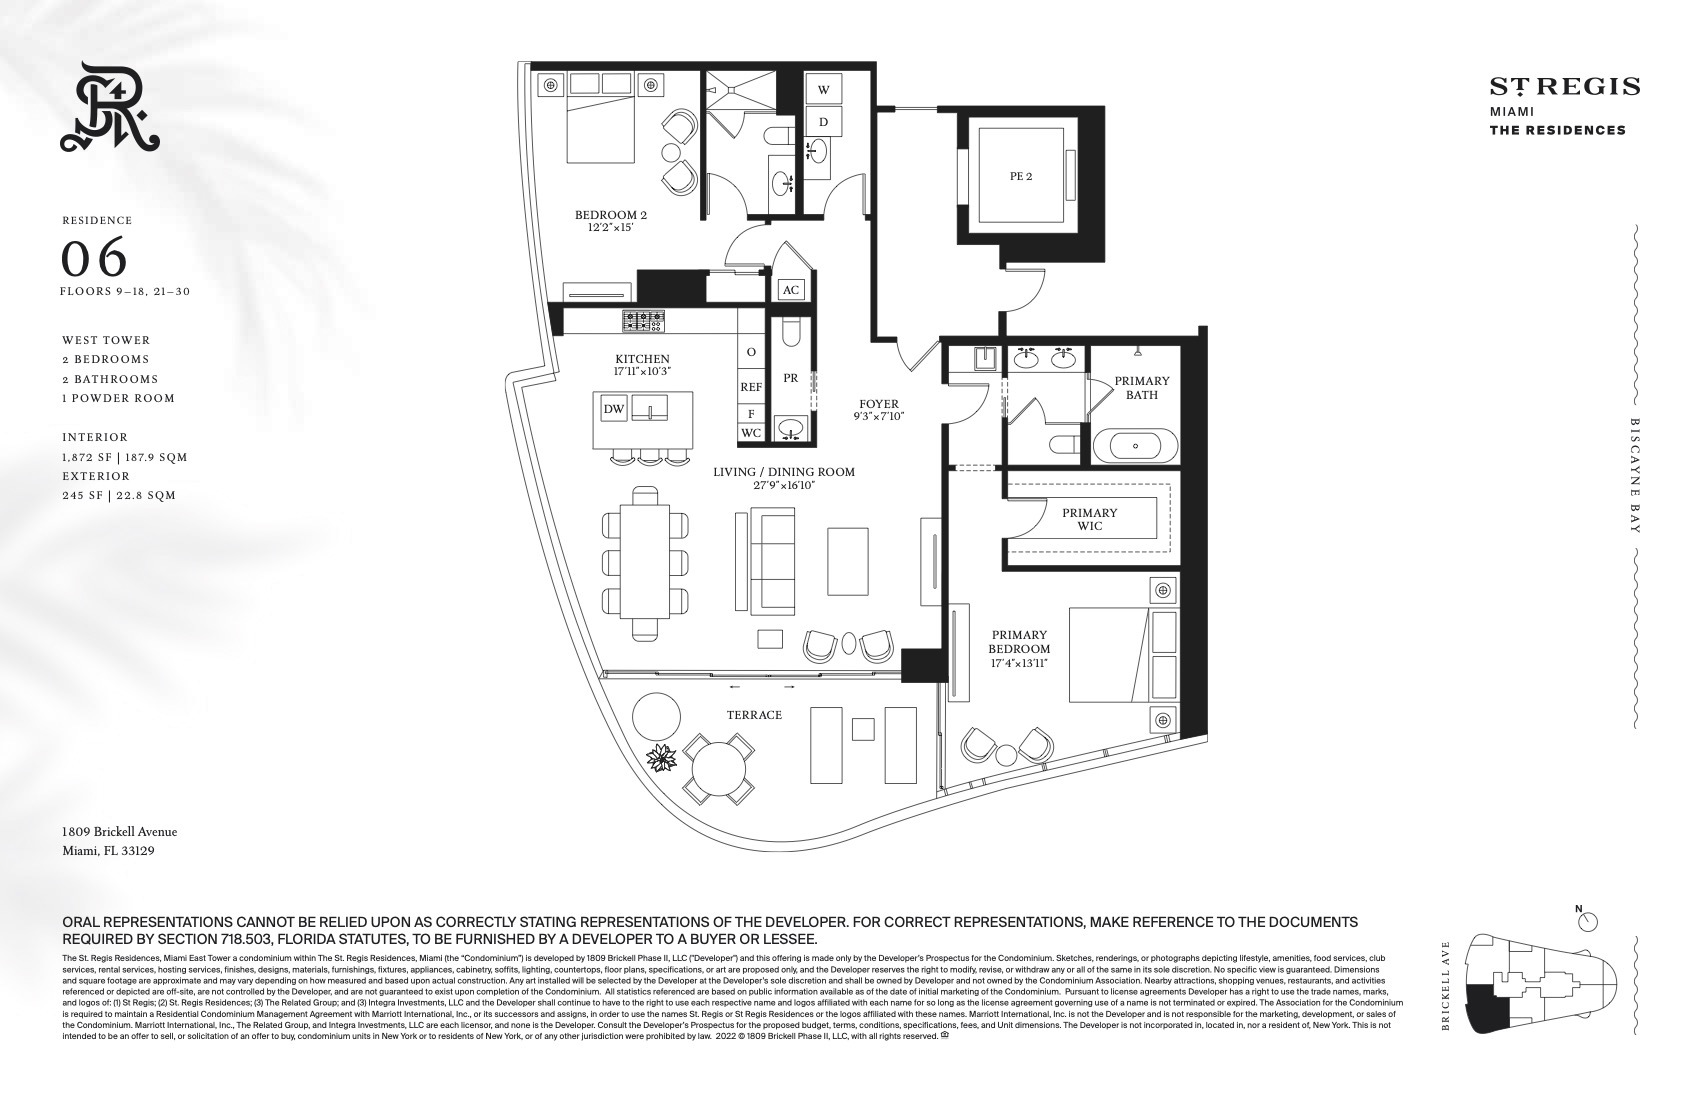 Floor Plan for St. Regis Brickell Floorplans, Residence 06